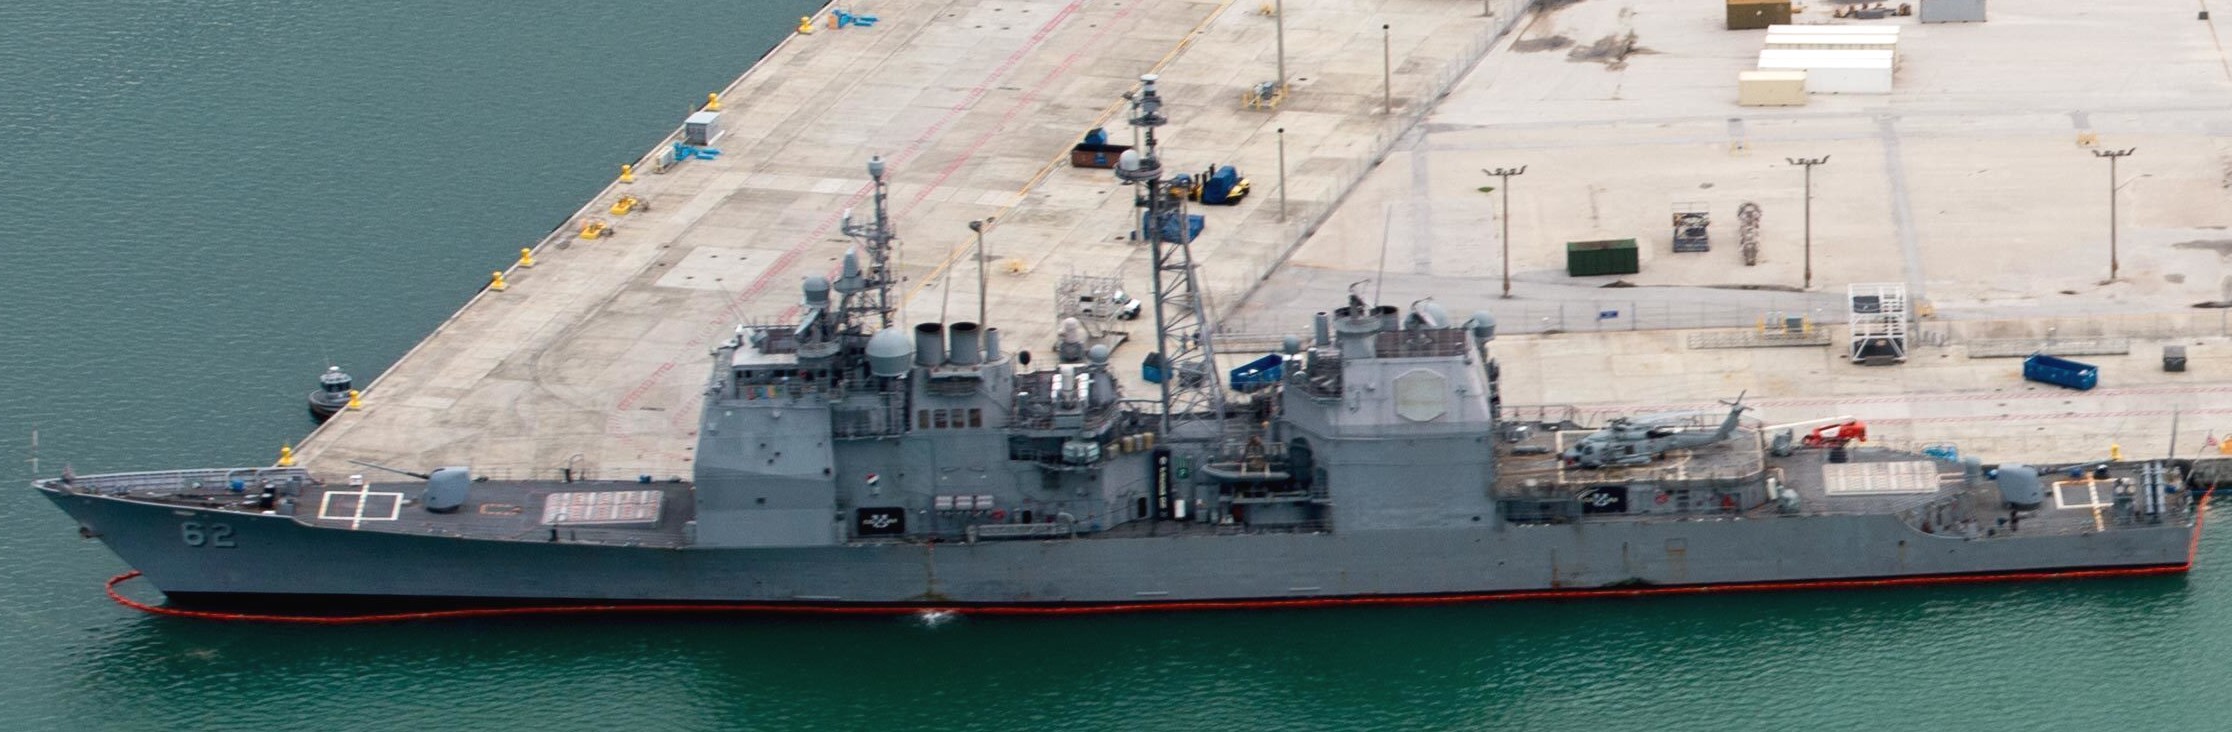 cg-62 uss chancellorsville ticonderoga class guided missile cruiser aegis us navy apra harbor guam 60